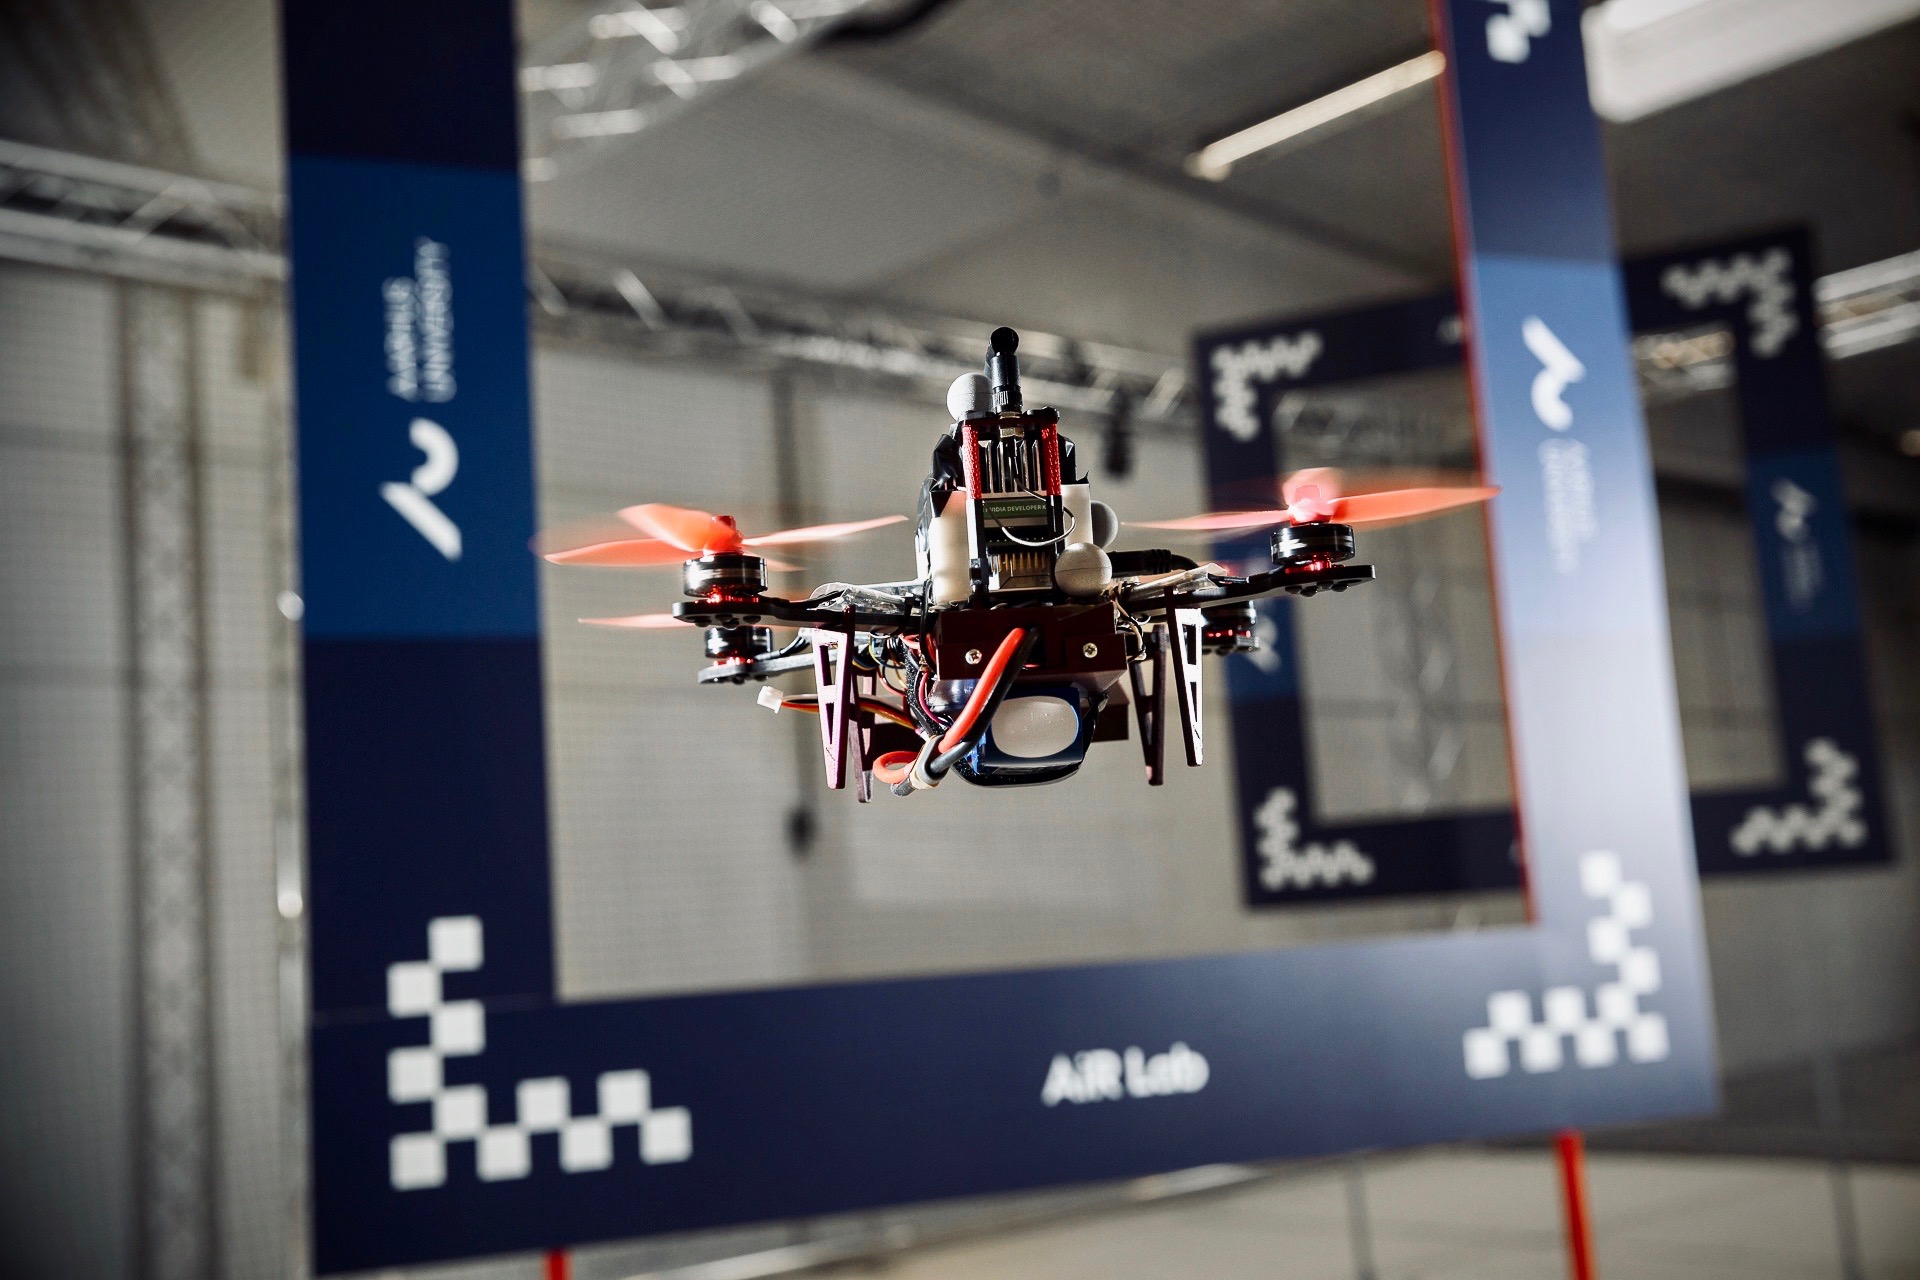 Fast & furious: Autonomt droneræs for kunstig intelligens